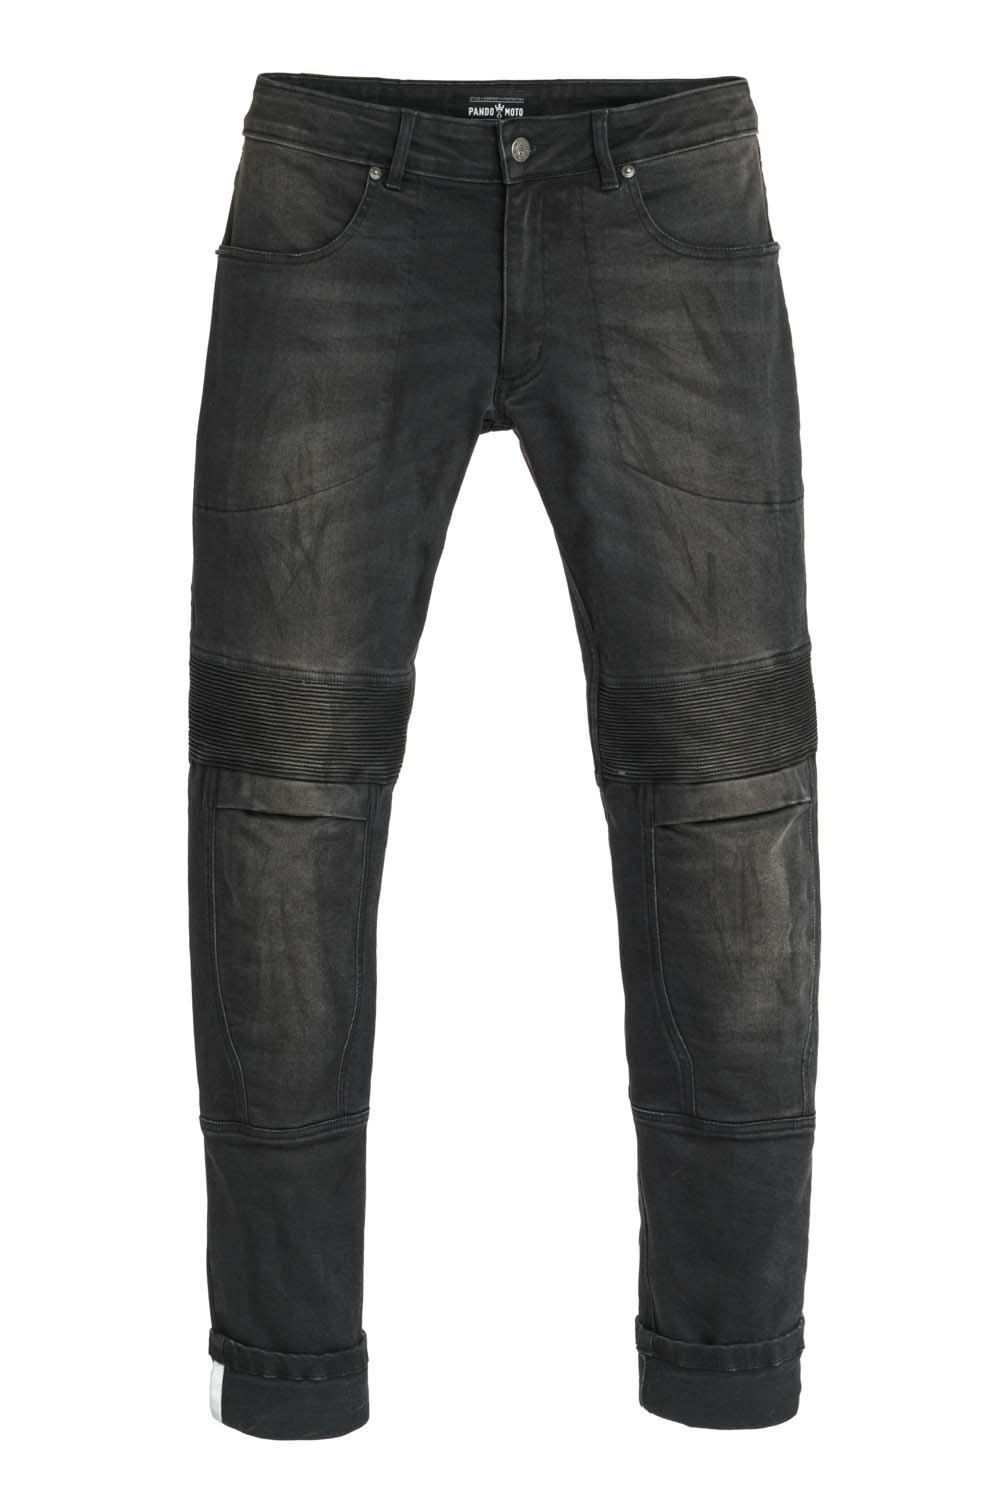 motorcycle jeans ireland